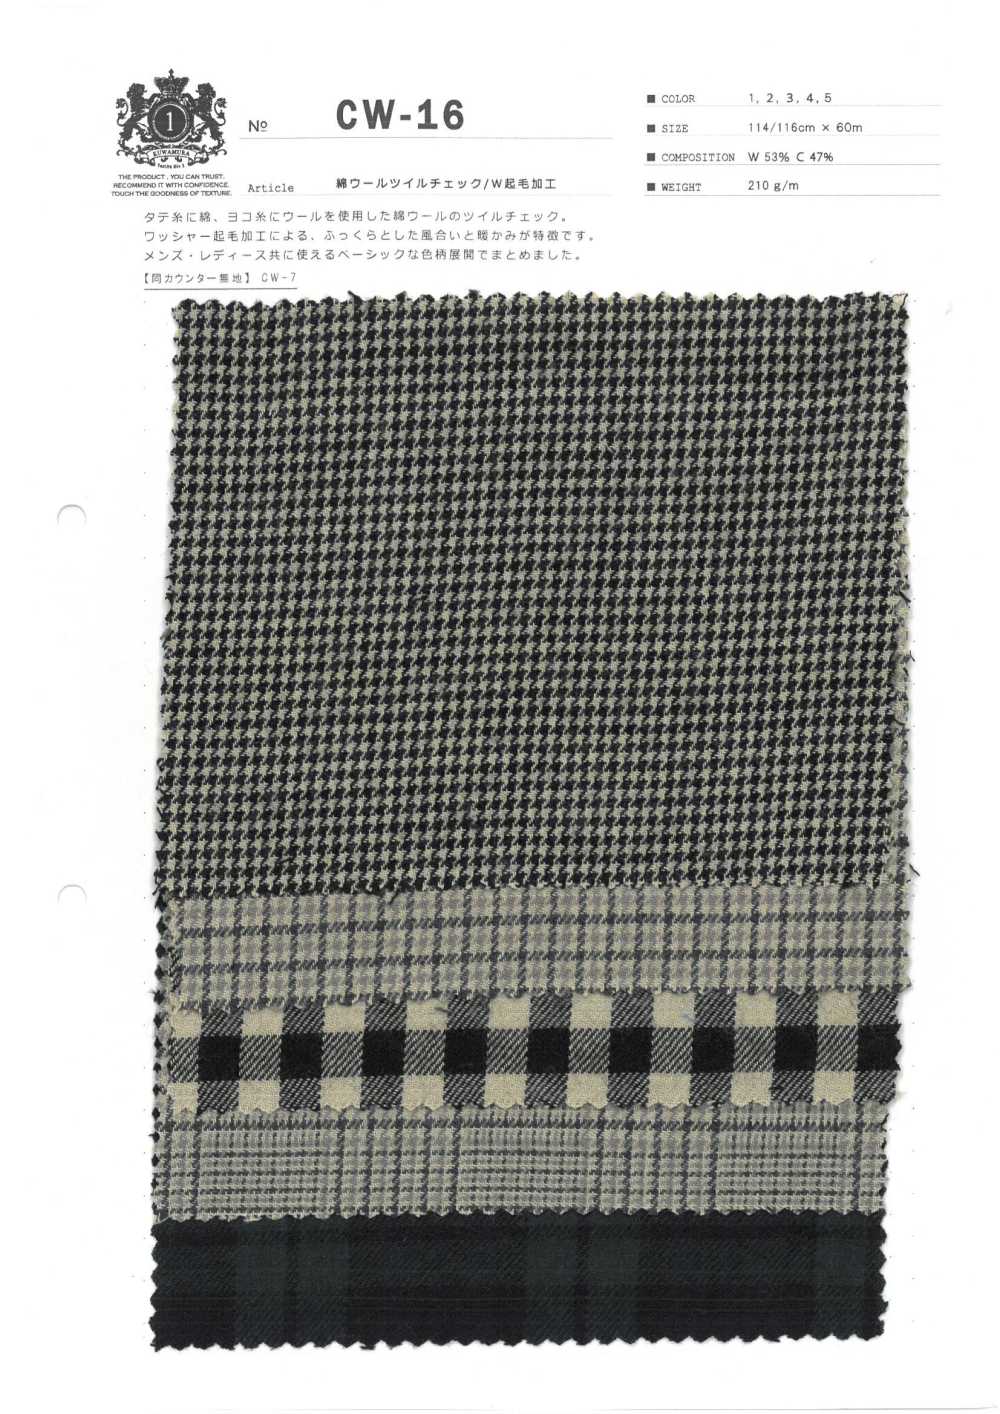 CW-16 Coton Sergé Check/W Fuzzy Processing[Fabrication De Textile] Fibre Kuwamura